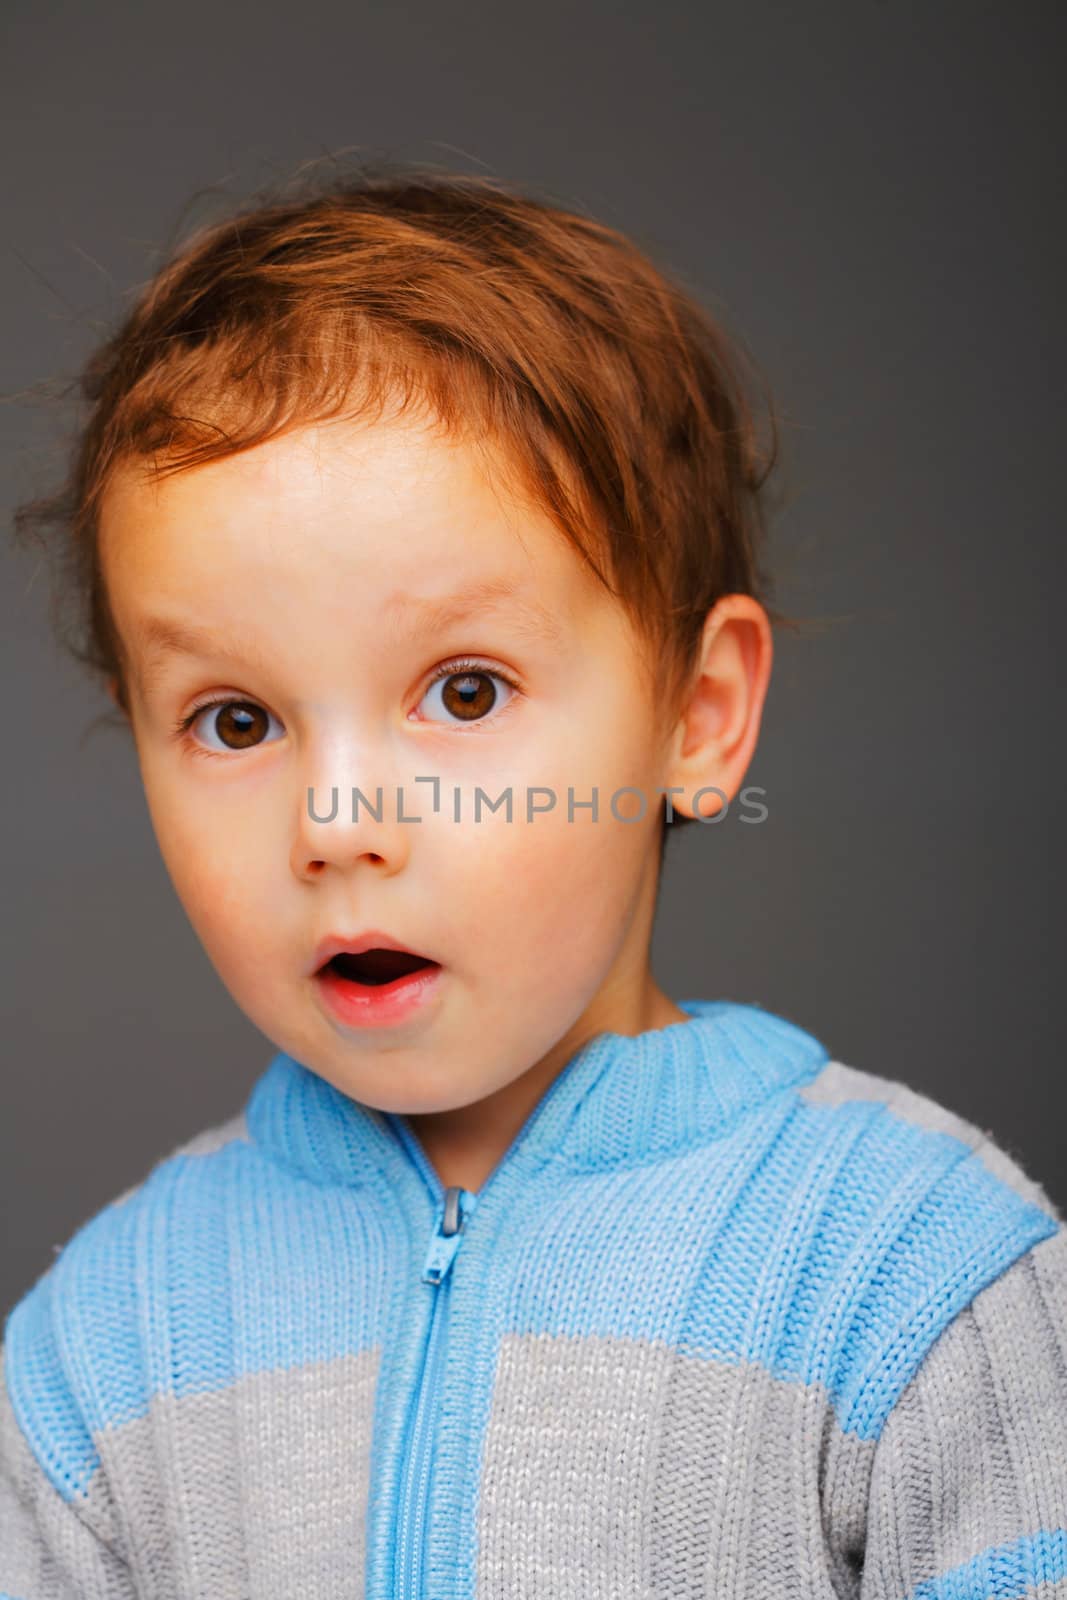 Closeup portrait of a little surprised boy in a blue sweater